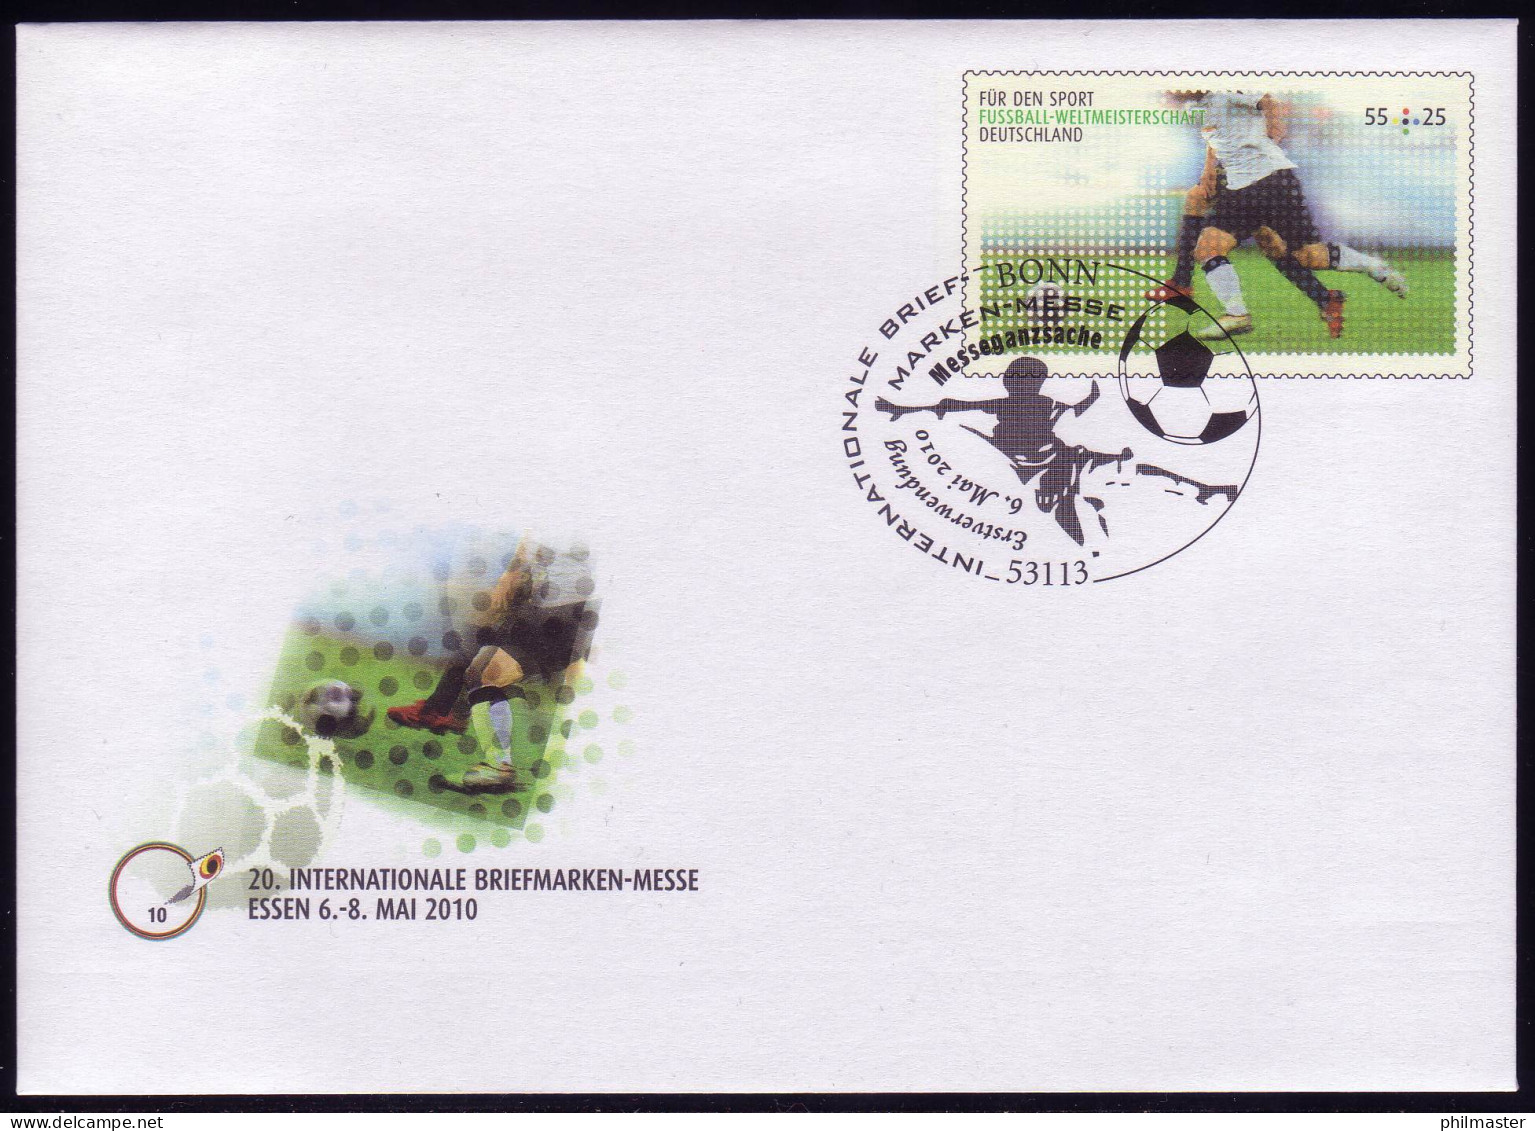 USo 207 Briefmarken-Messe Essen - Fußball-WM 2010, EV-O Bonn 6.5.10 - Sobres - Nuevos